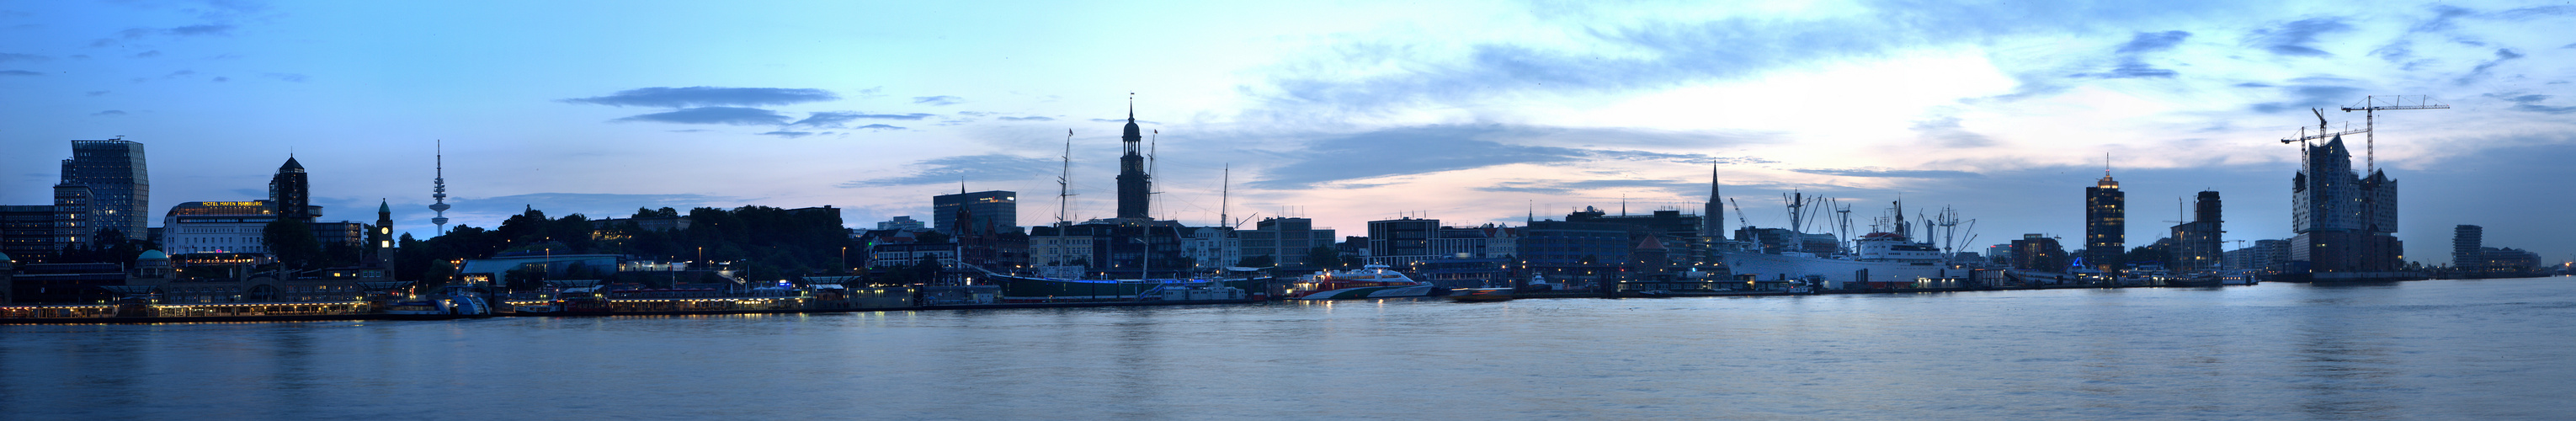 Early Morning Hafen Hamburg